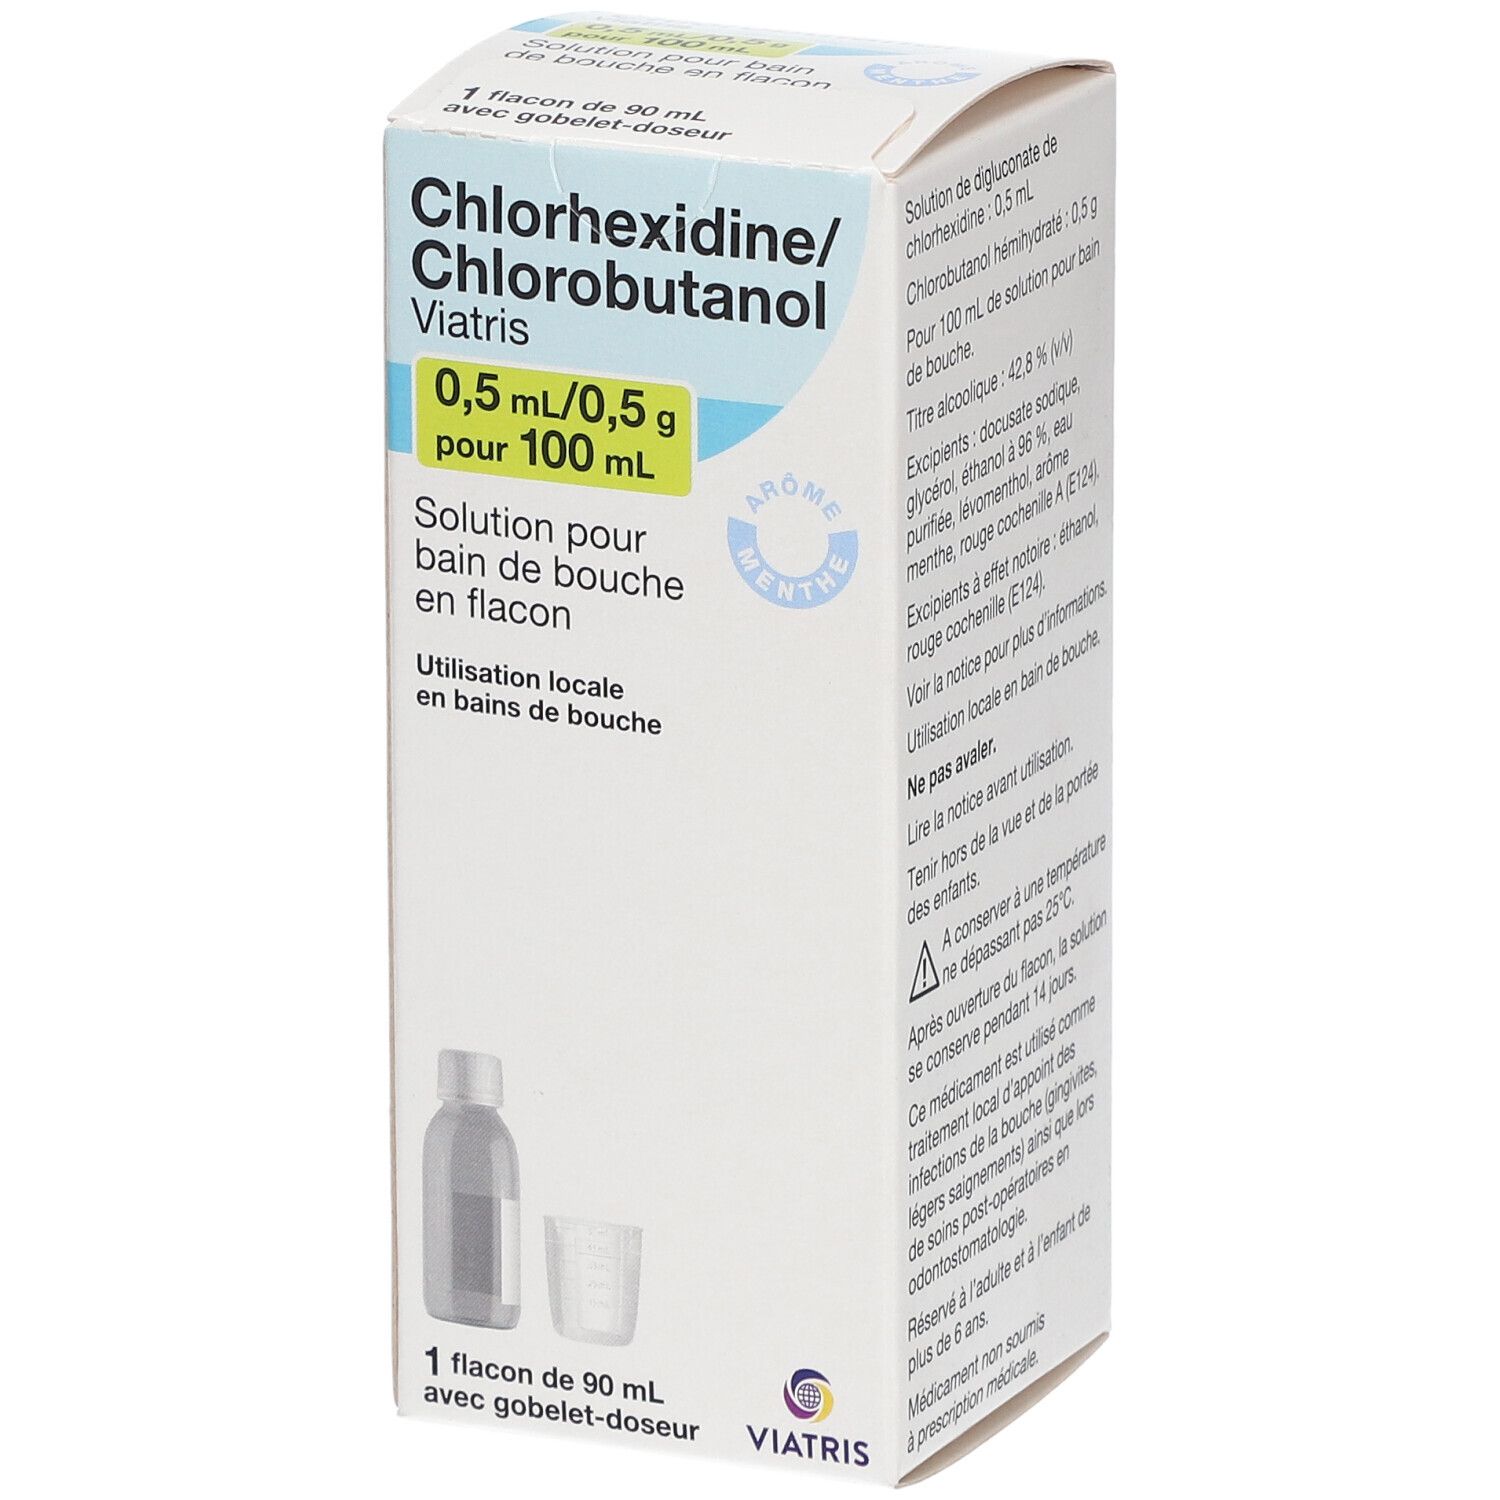 Chlorhexidine/Chlorobutanol Mylan 0,5 ml/0,5 g pour 100 ml